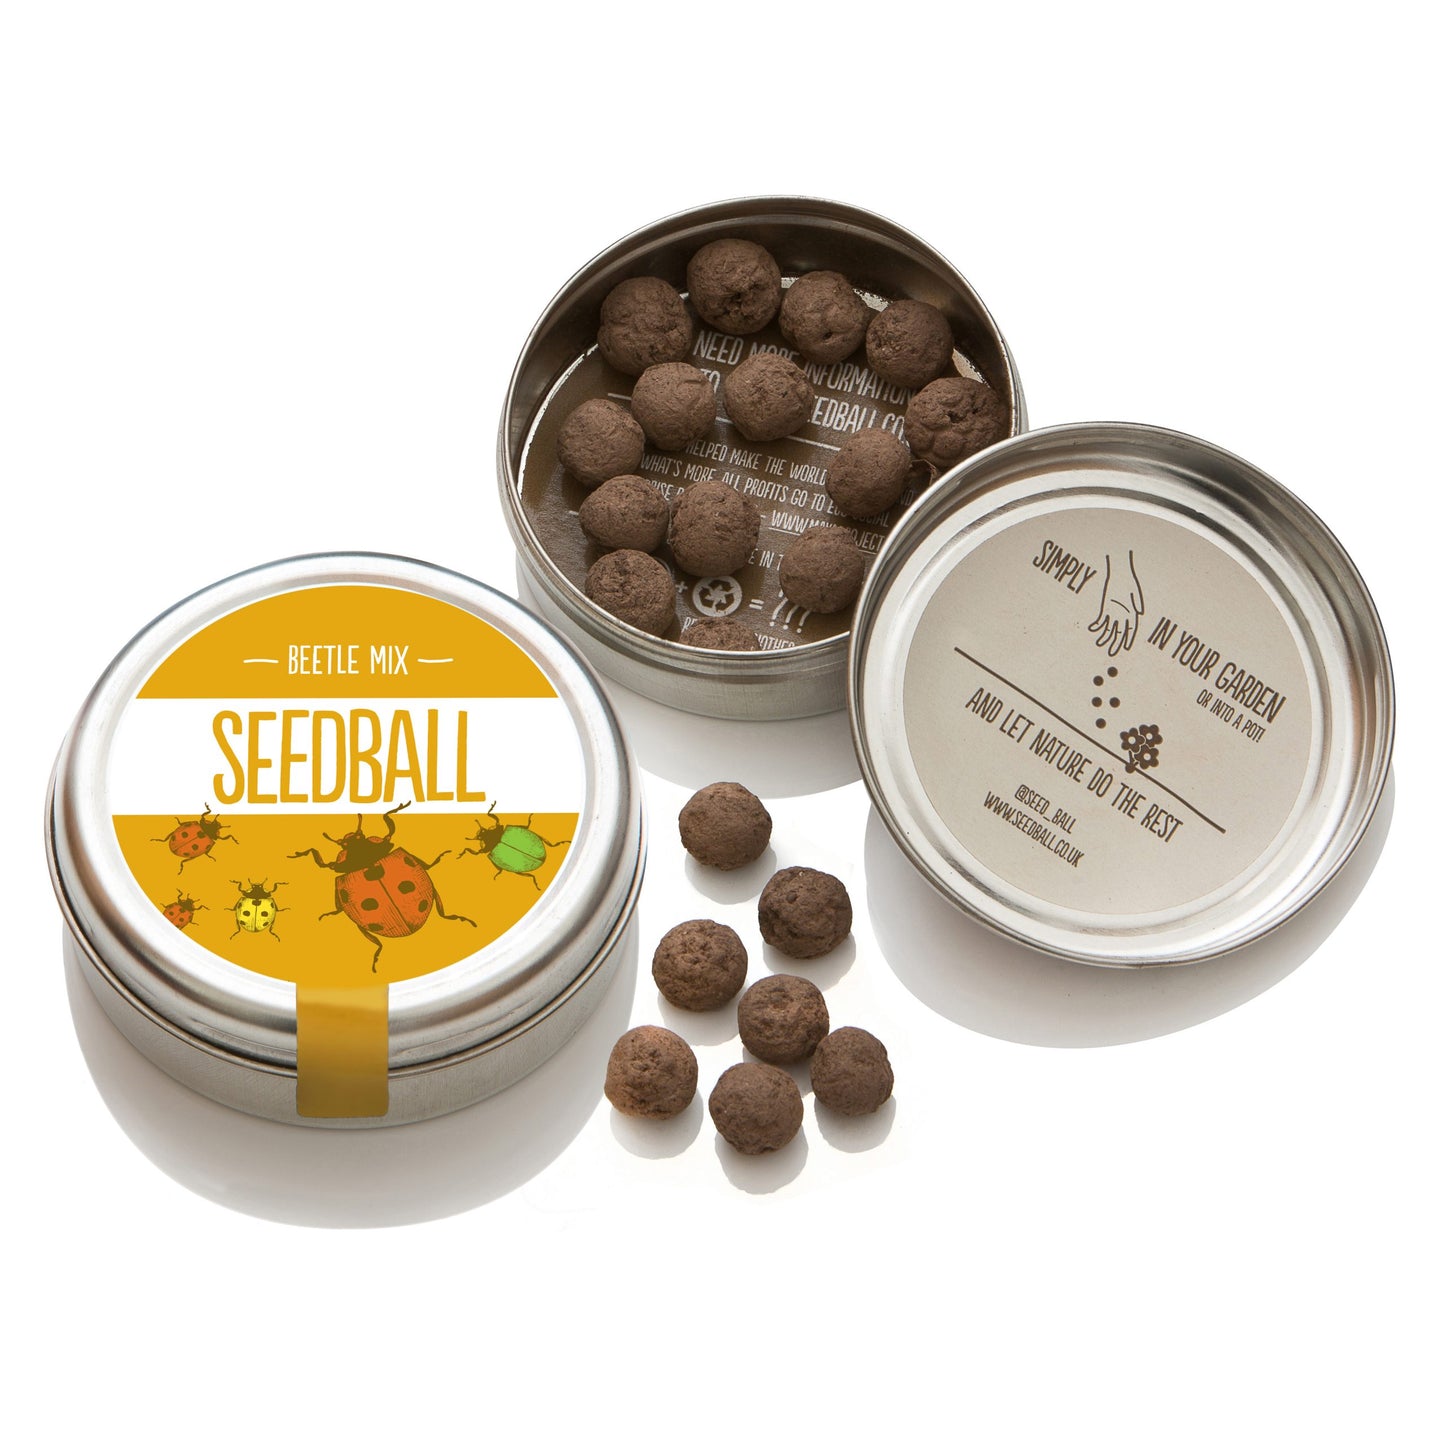 Seedball Tin - Beetle Mix